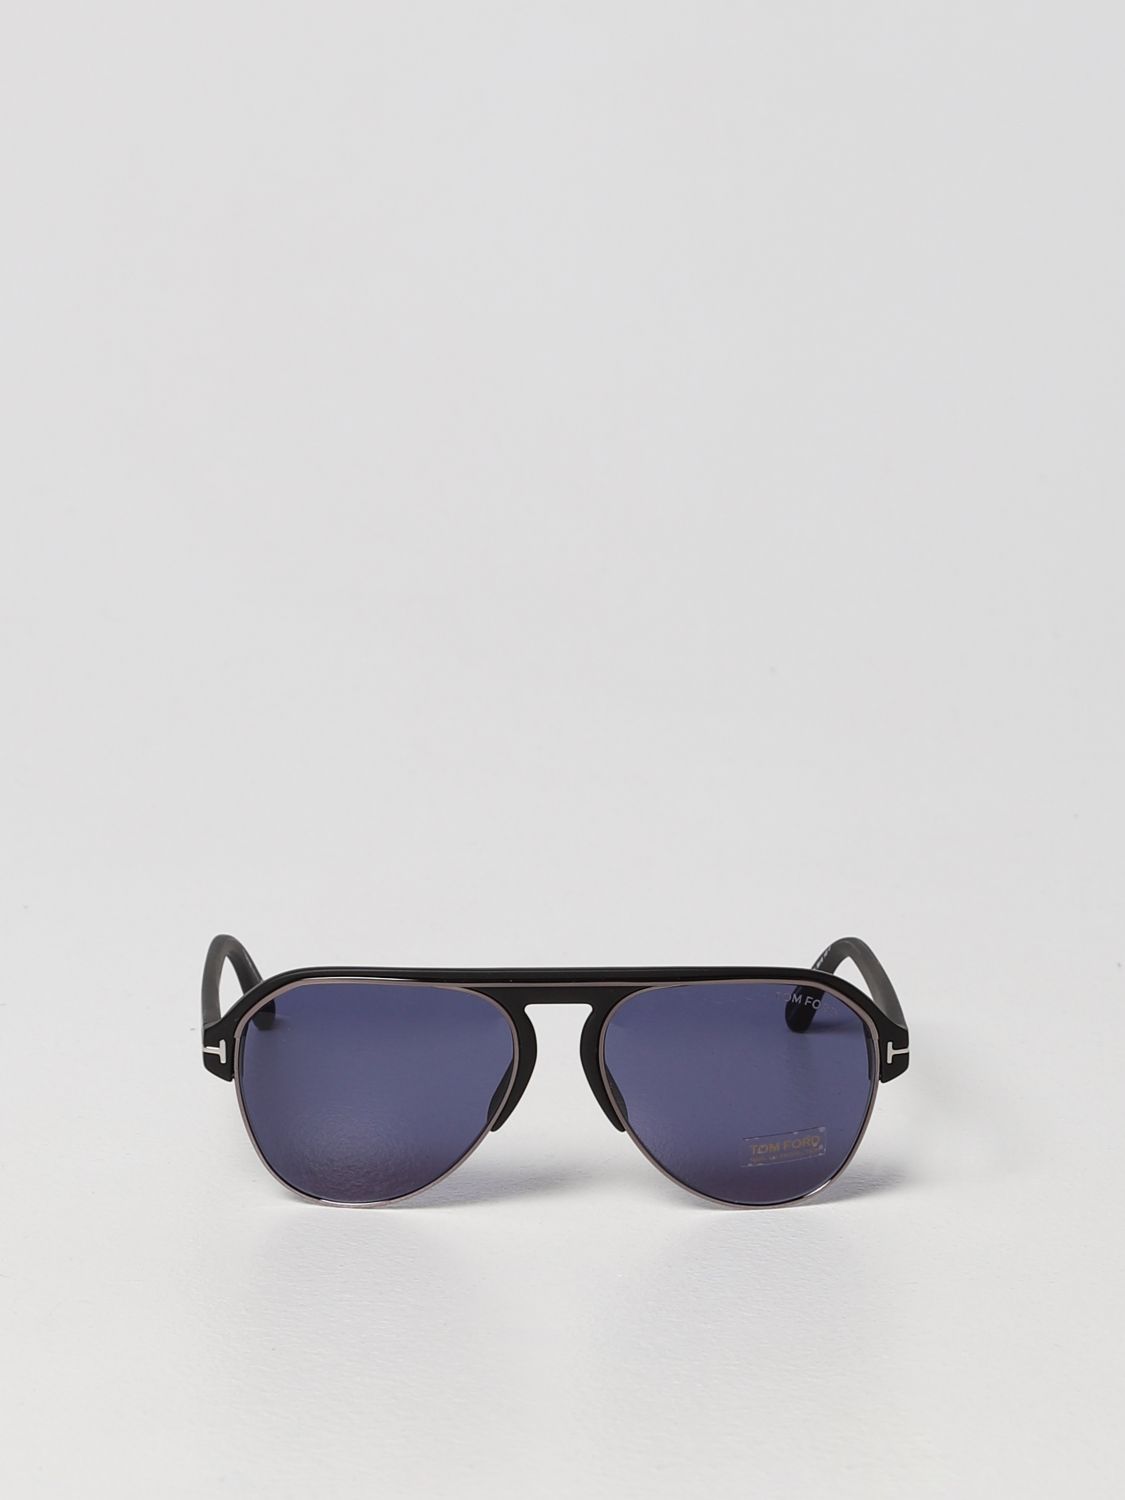 Glasses Tom Ford: TF 929 Marshall Tom Ford sunglasses black 2